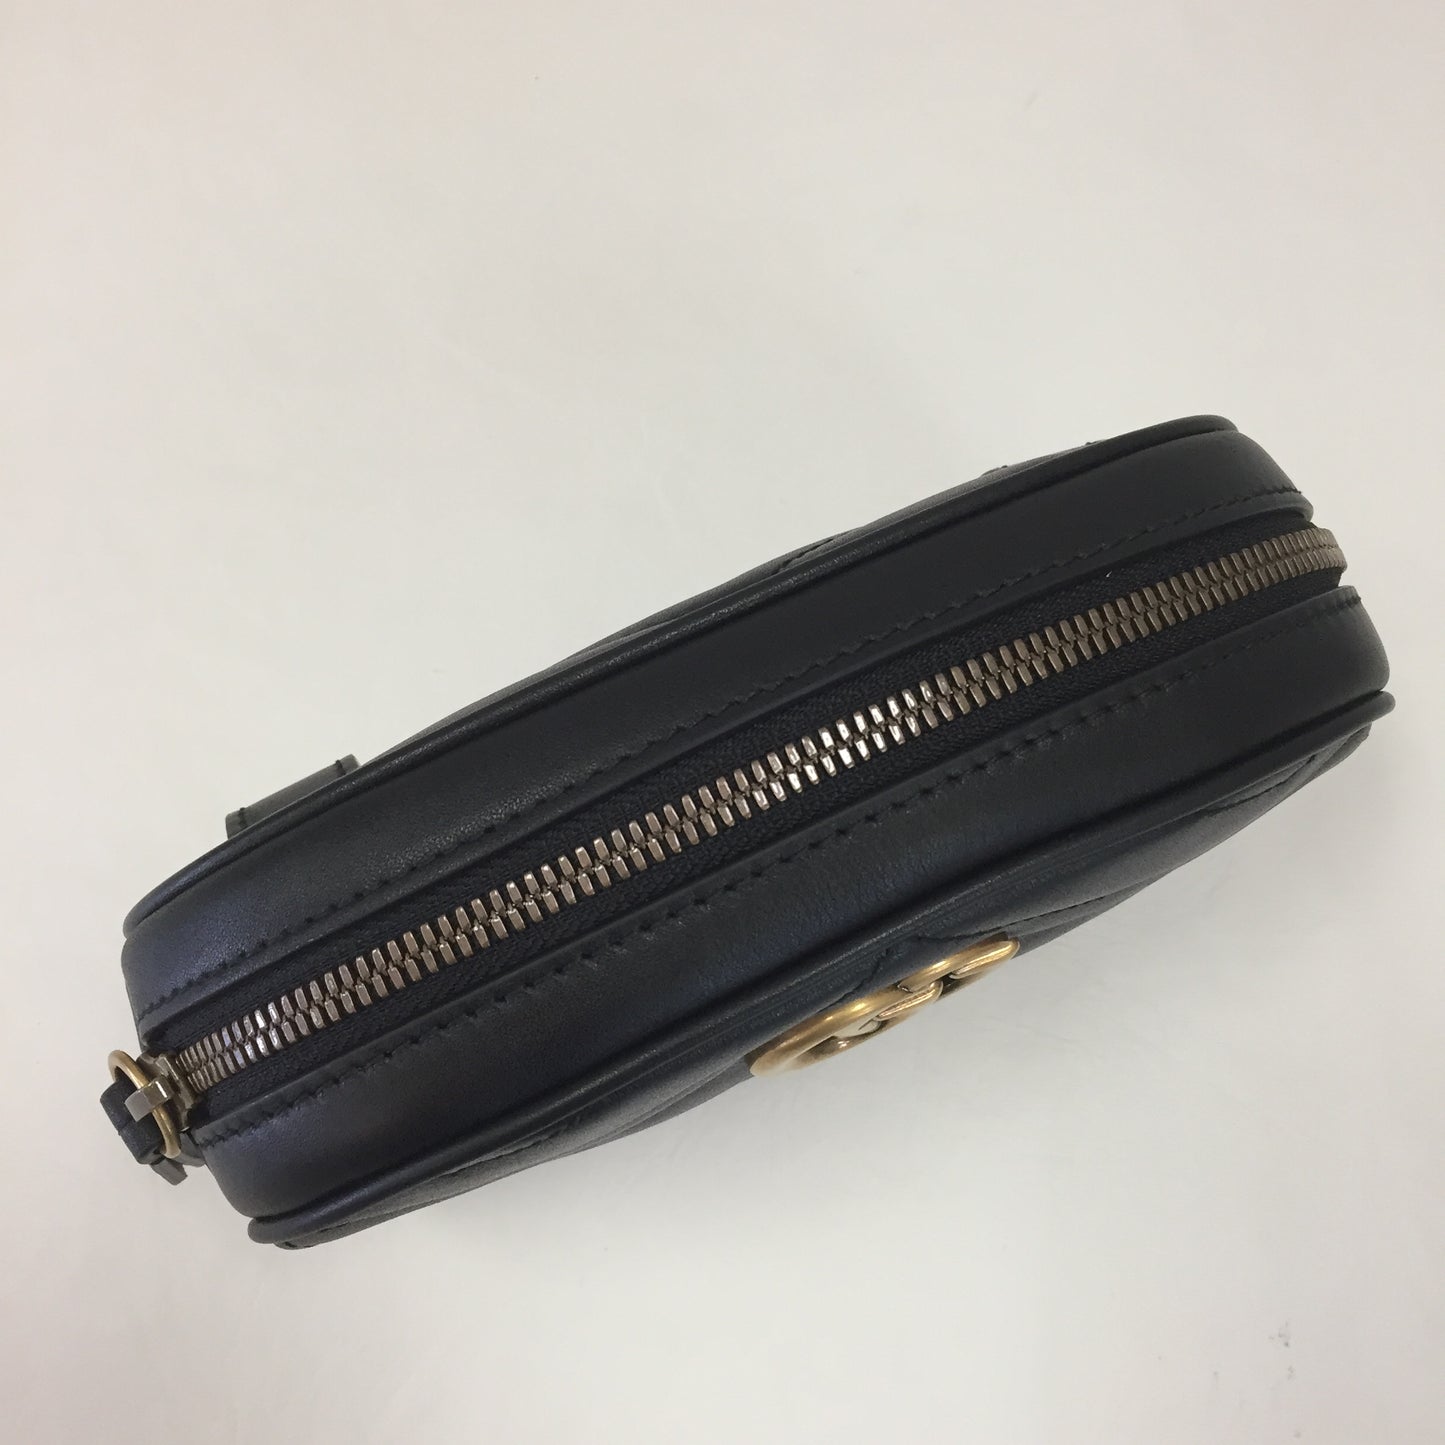 Authentic Gucci Black Marmont Small Belt Bag 85